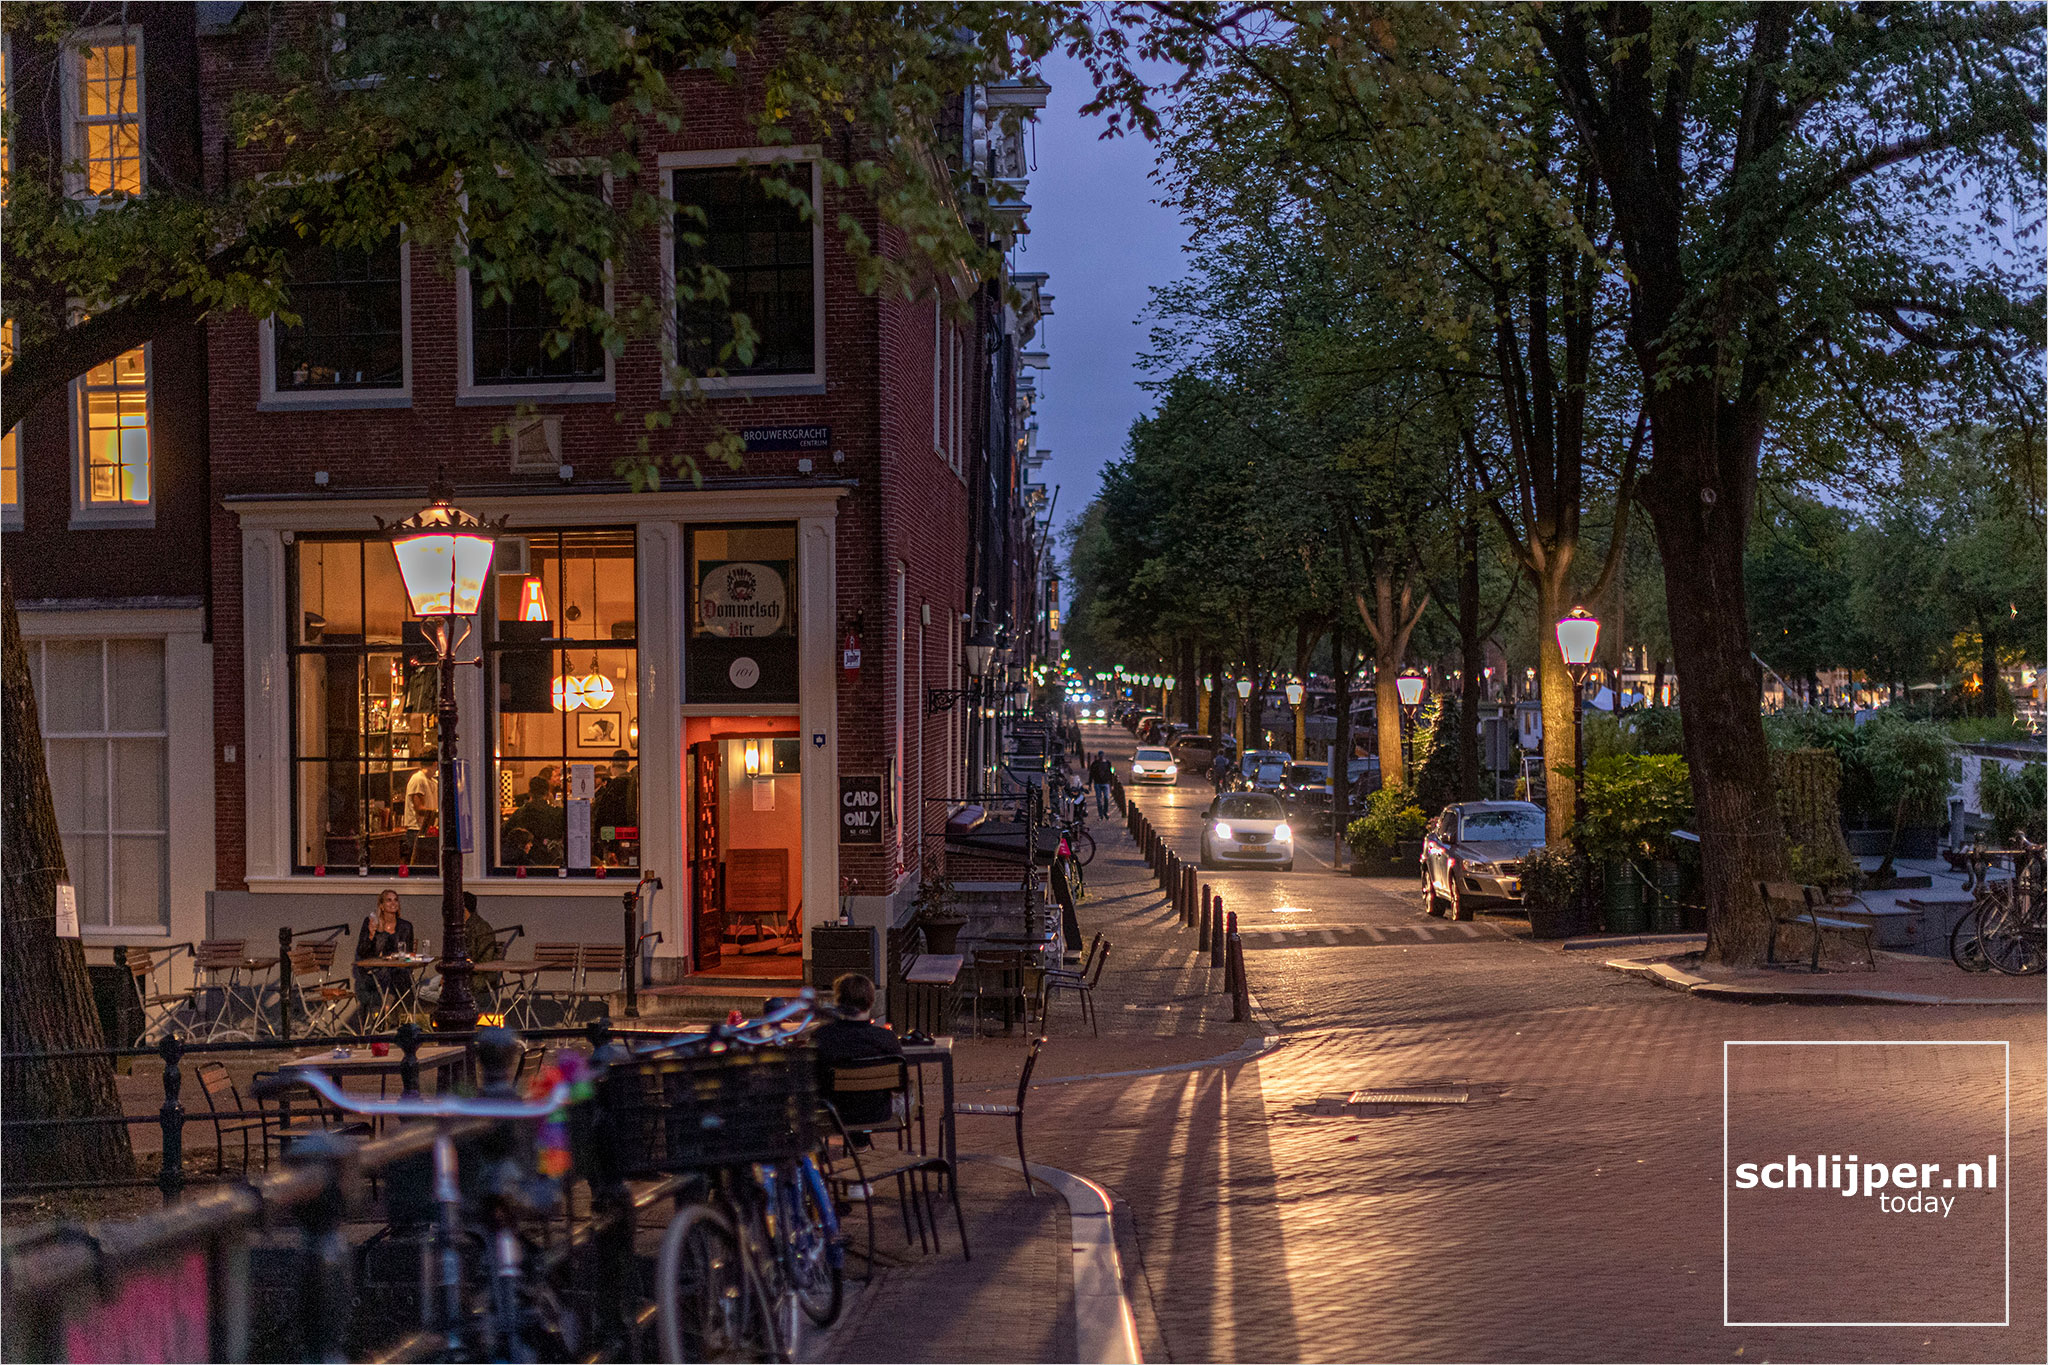 The Netherlands, Amsterdam, 31 augustus 2021